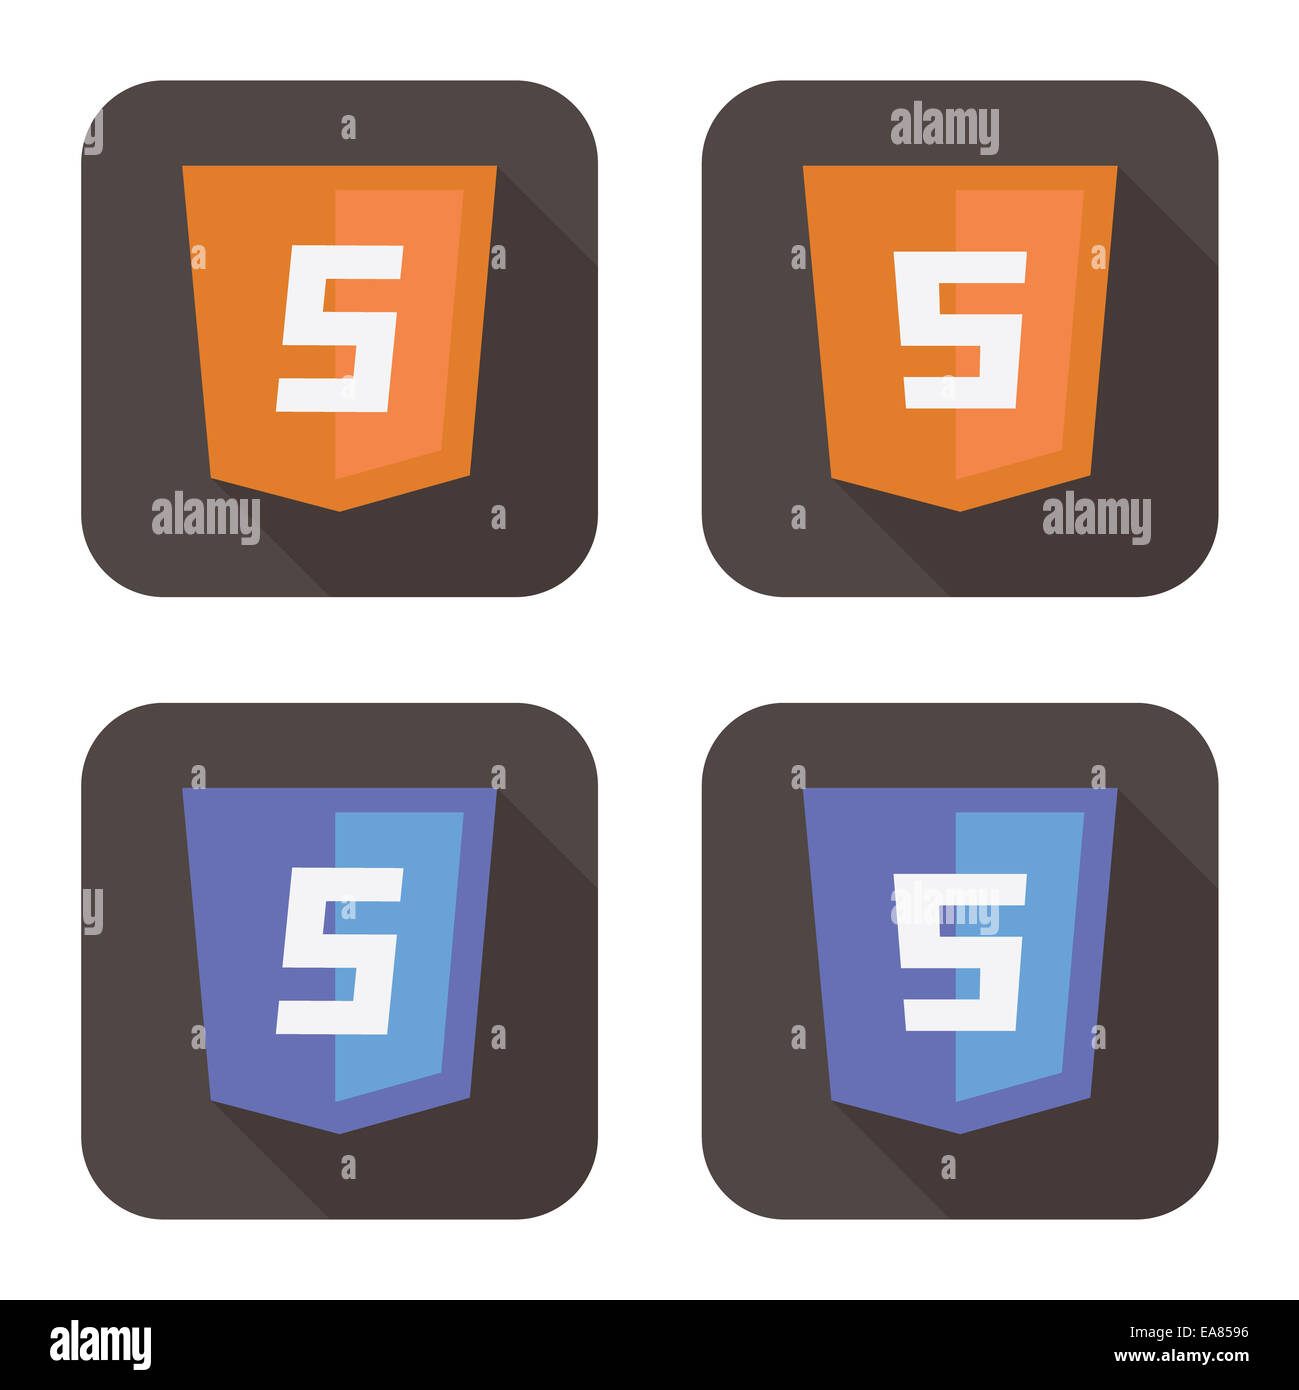 vector illustration of orange and blue html shield Stock Photo